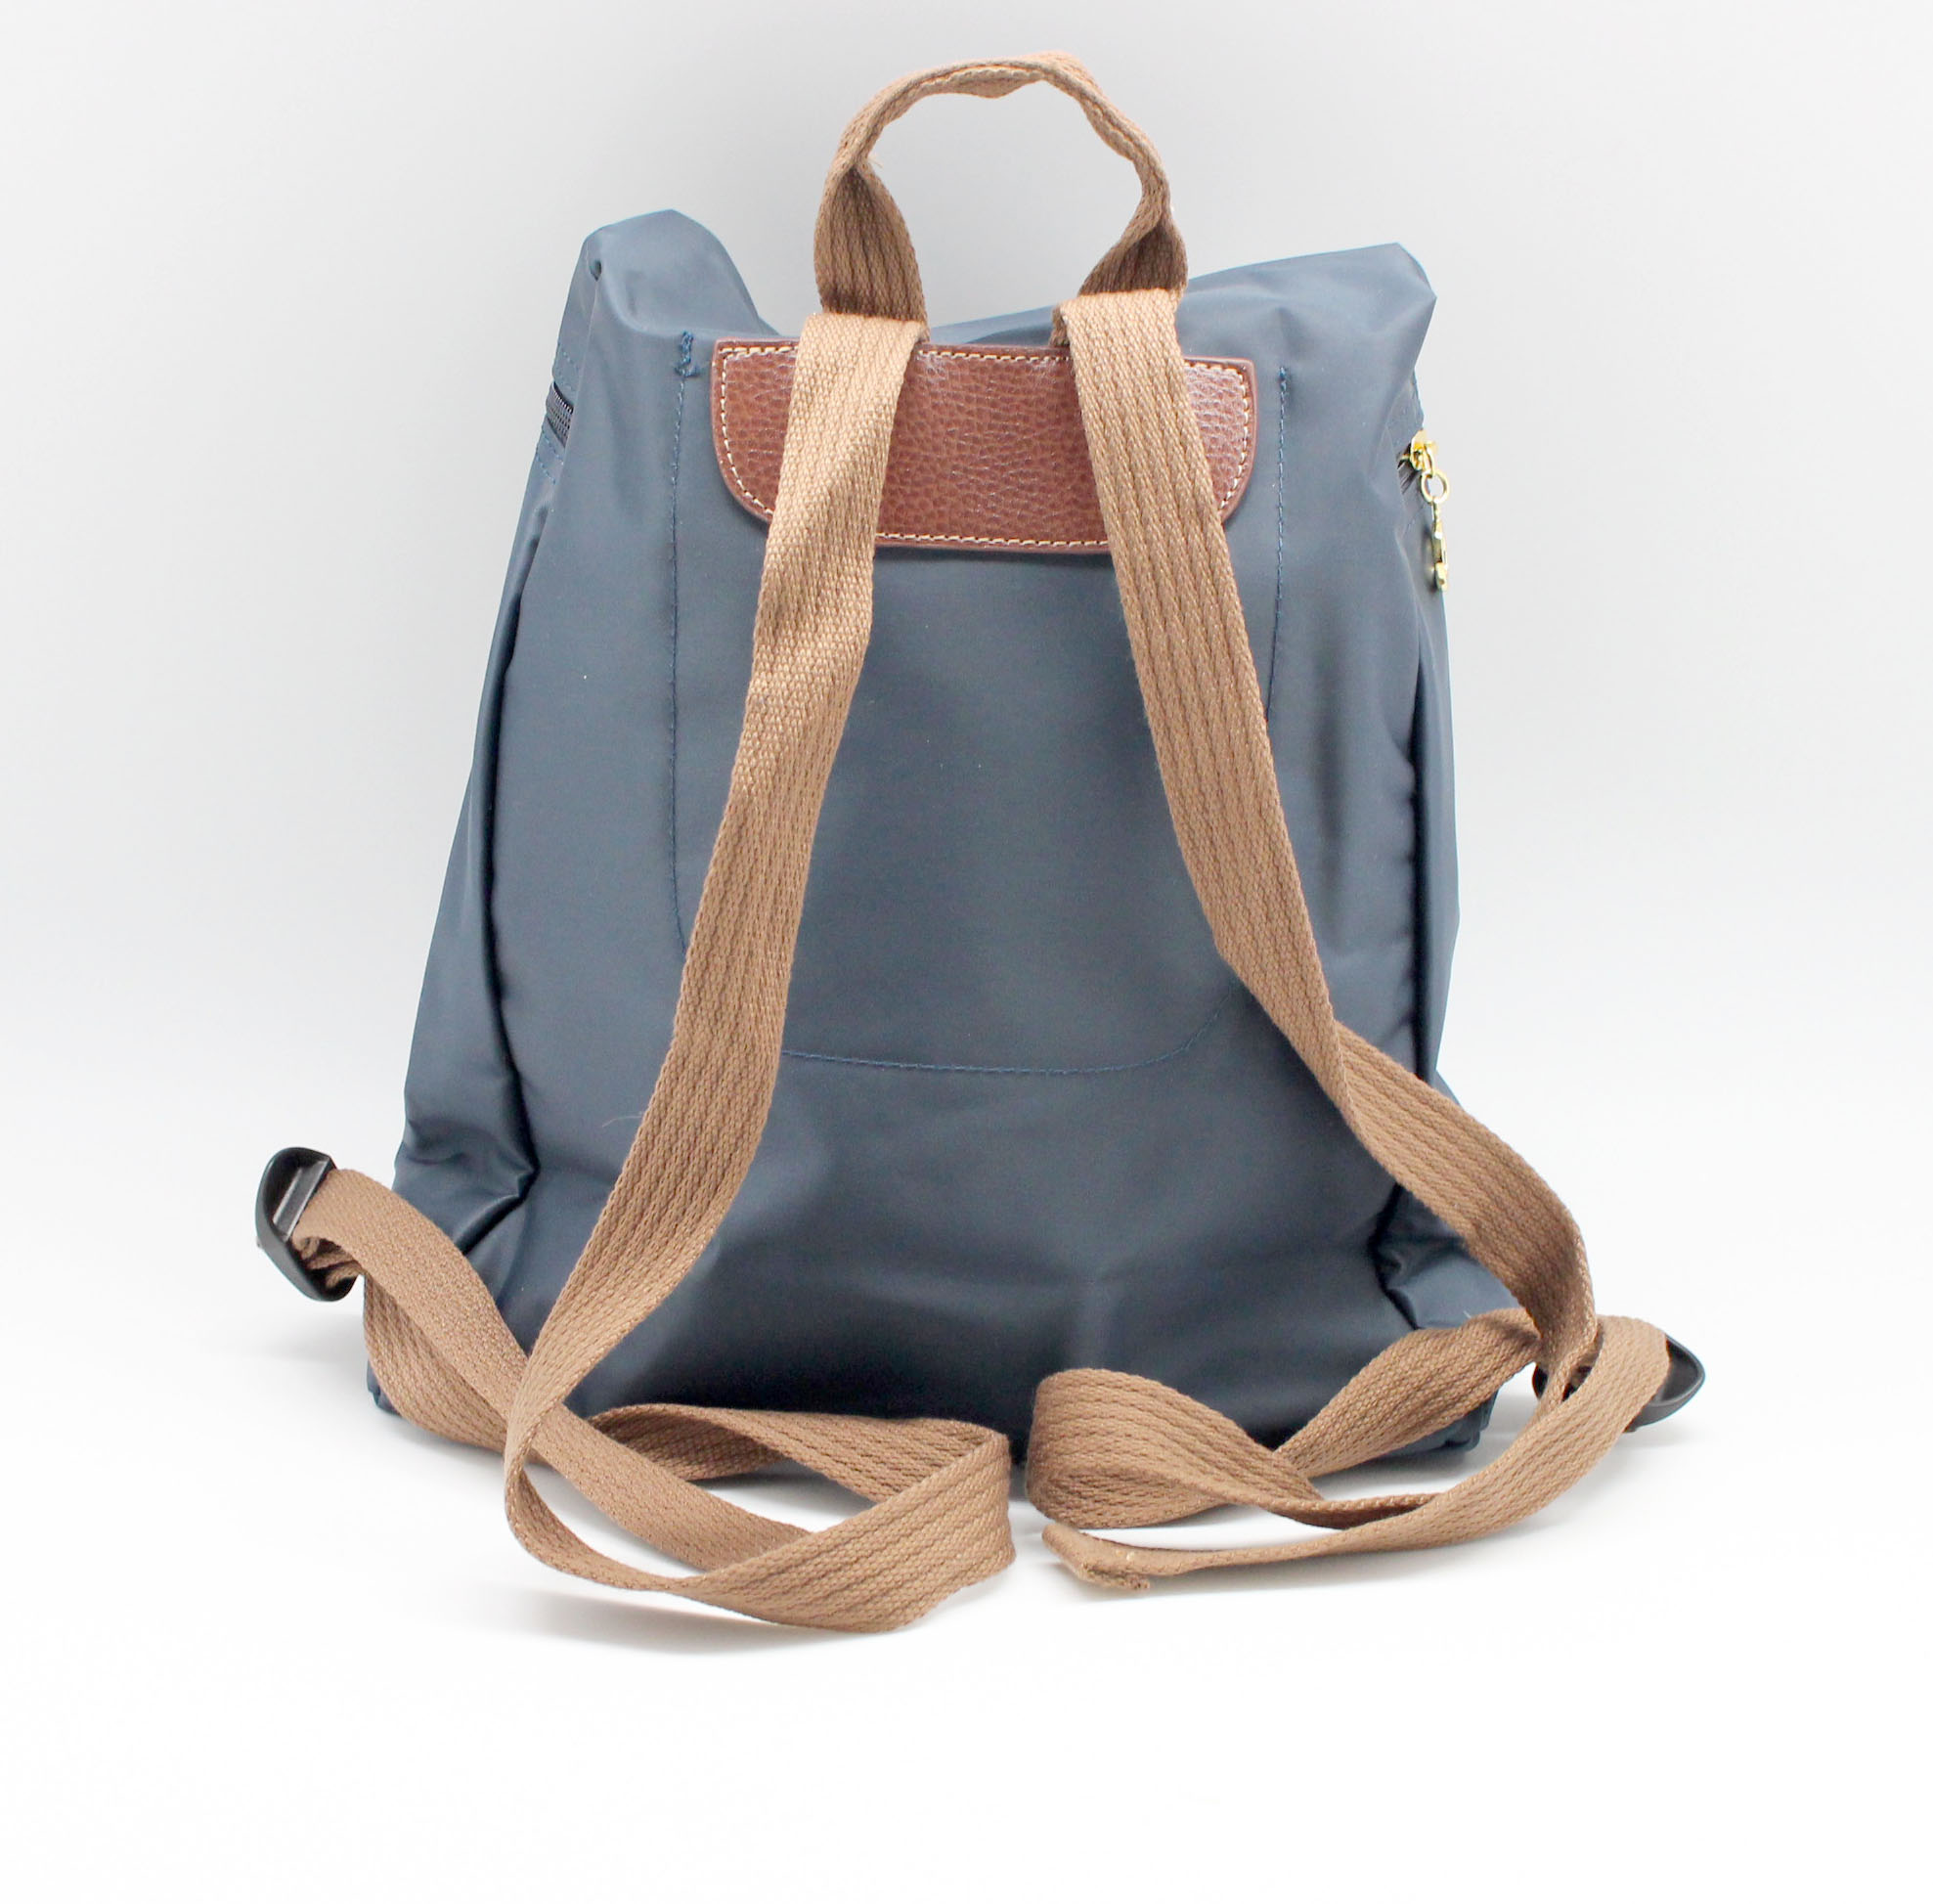 The Nylon Backpack